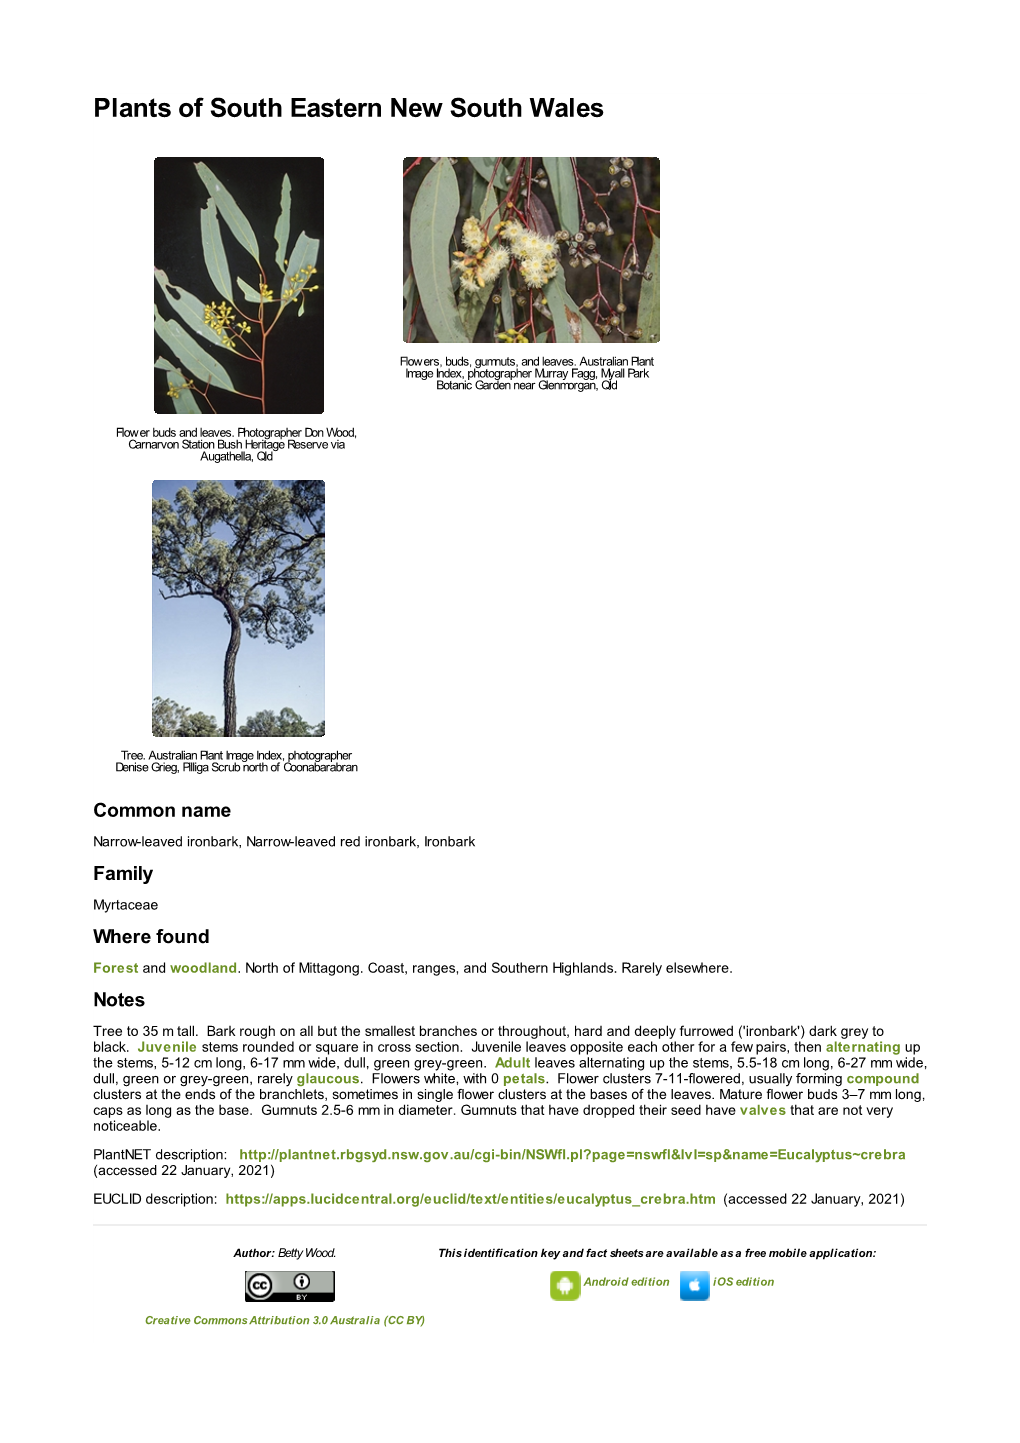 Eucalyptus Crebra